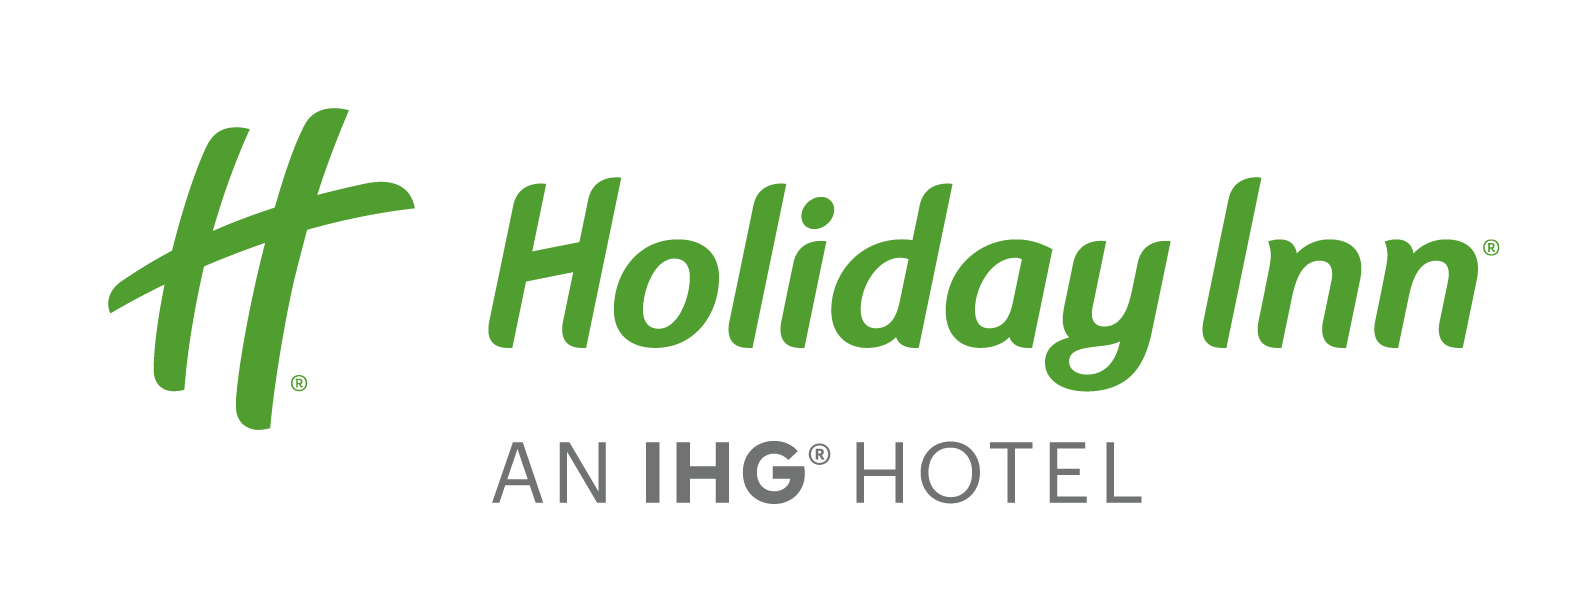 Holiday Inn Logo - Holiday Inn Png Logo - Free Transparent PNG Logos